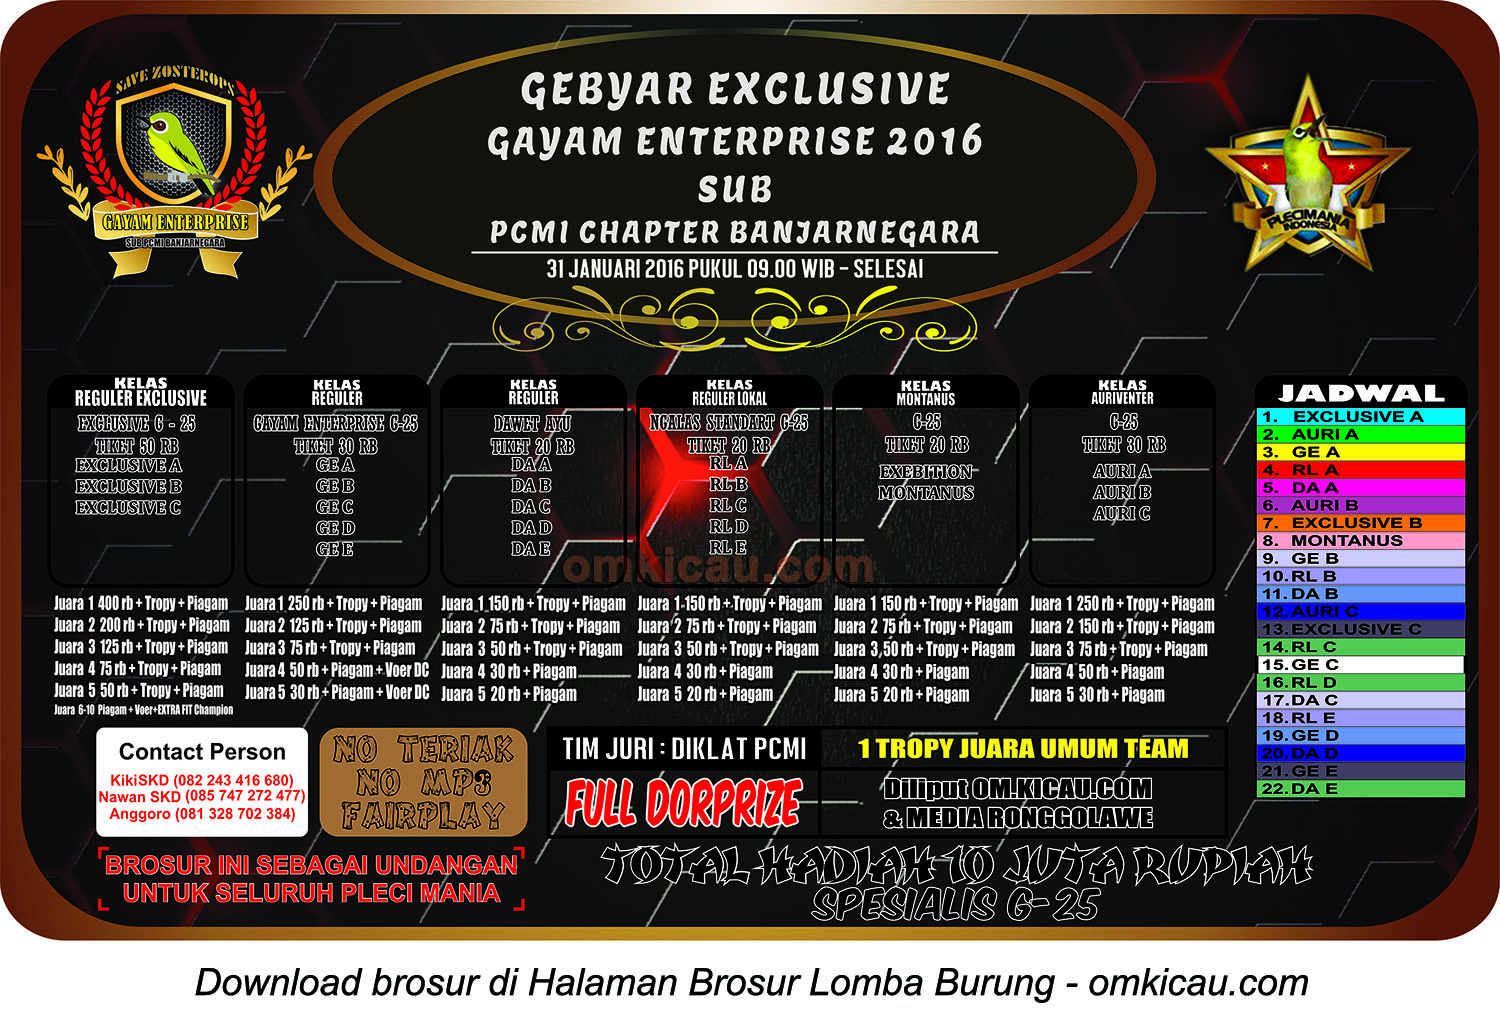 Brosur Kontes Pleci Gebyar Exclusive Gayam Enterprise Sub-PCMI Banjarnegara, 31 Januari 2016